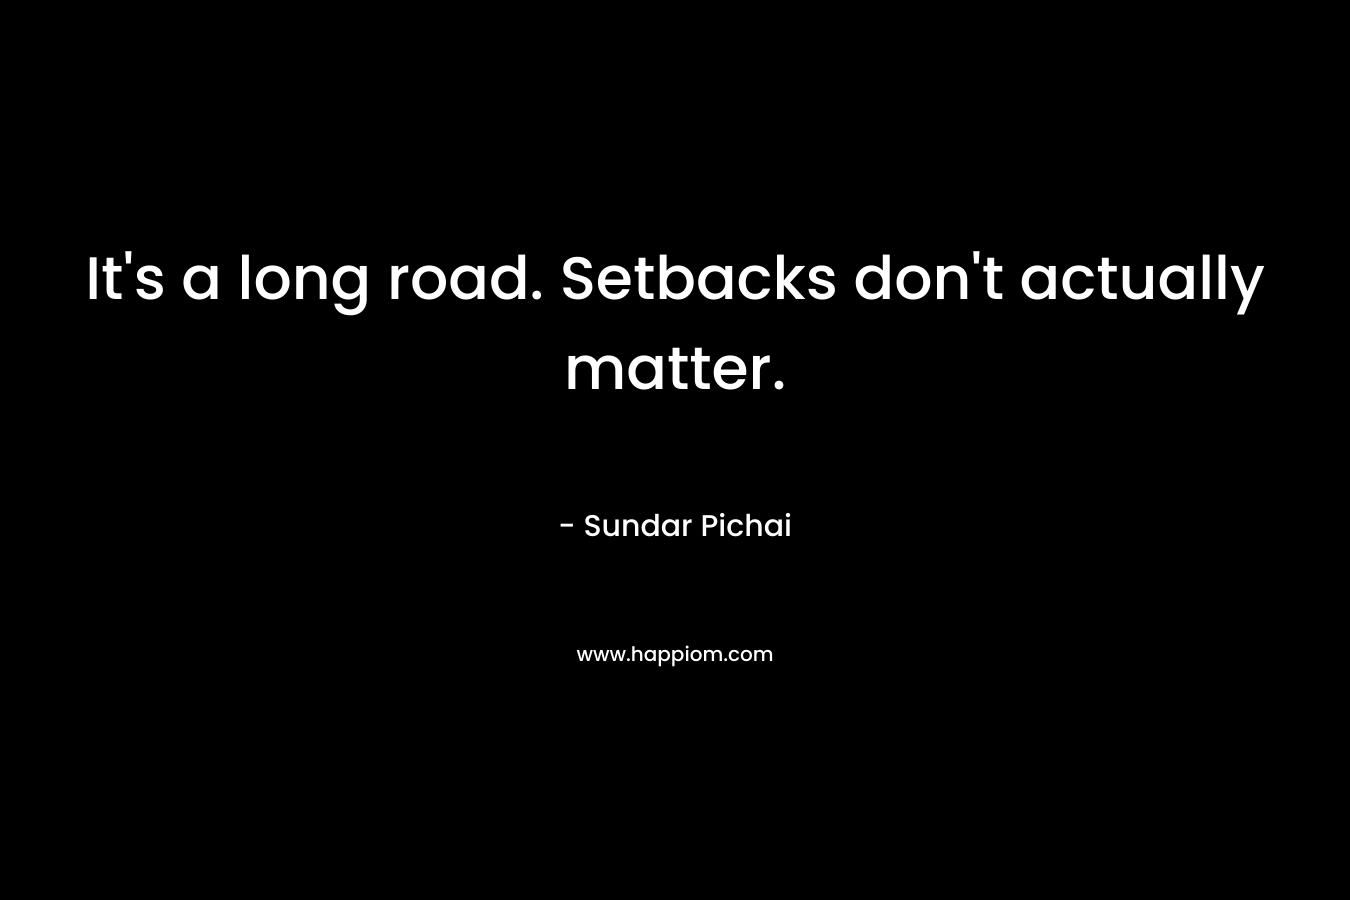 It’s a long road. Setbacks don’t actually matter. – Sundar Pichai